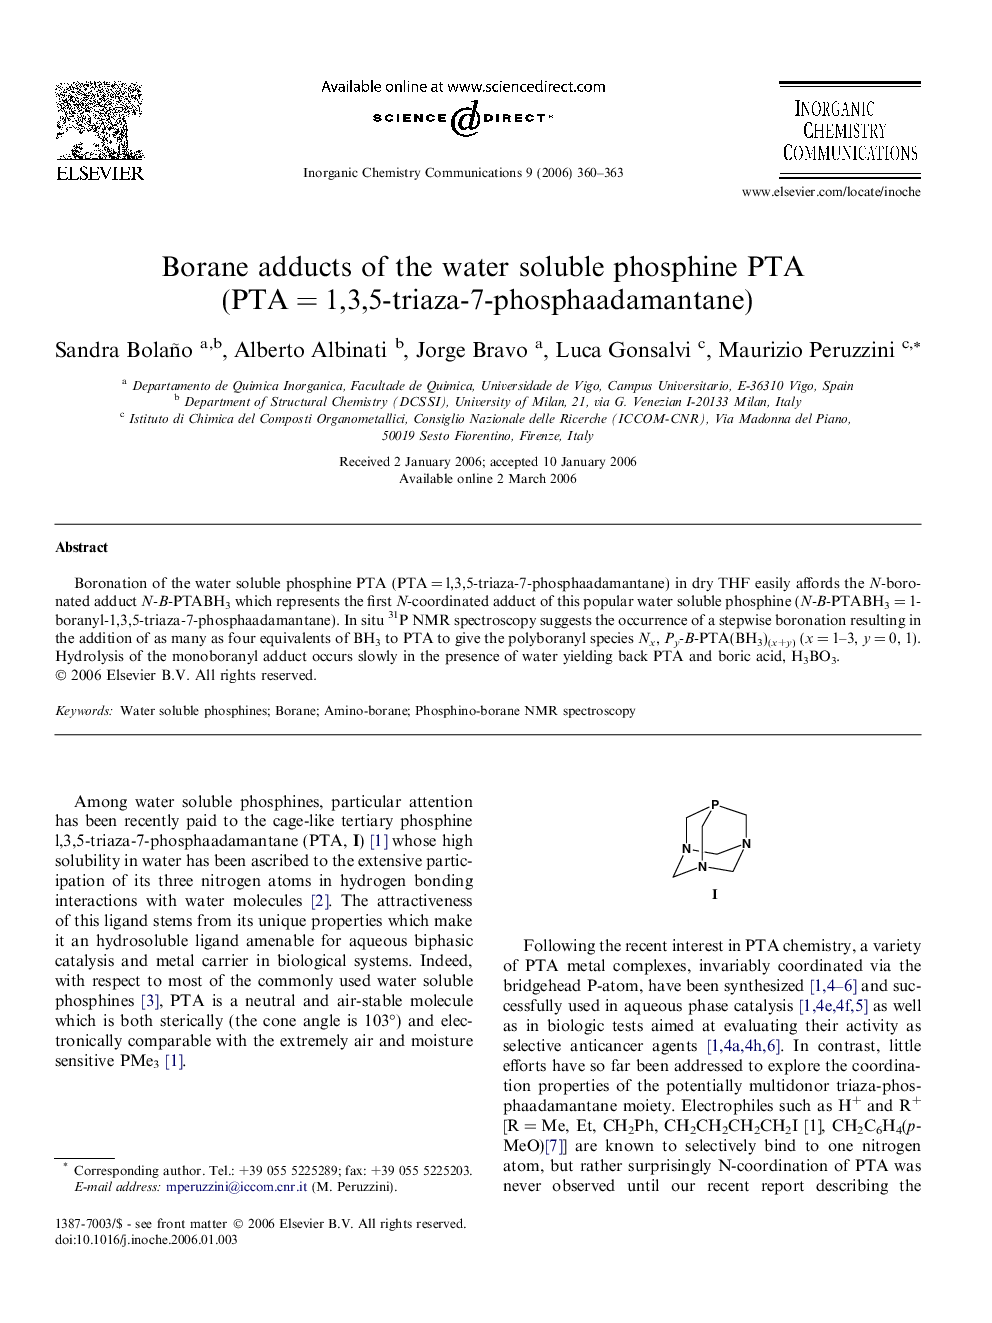 Borane adducts of the water soluble phosphine PTA (PTA = 1,3,5-triaza-7-phosphaadamantane)